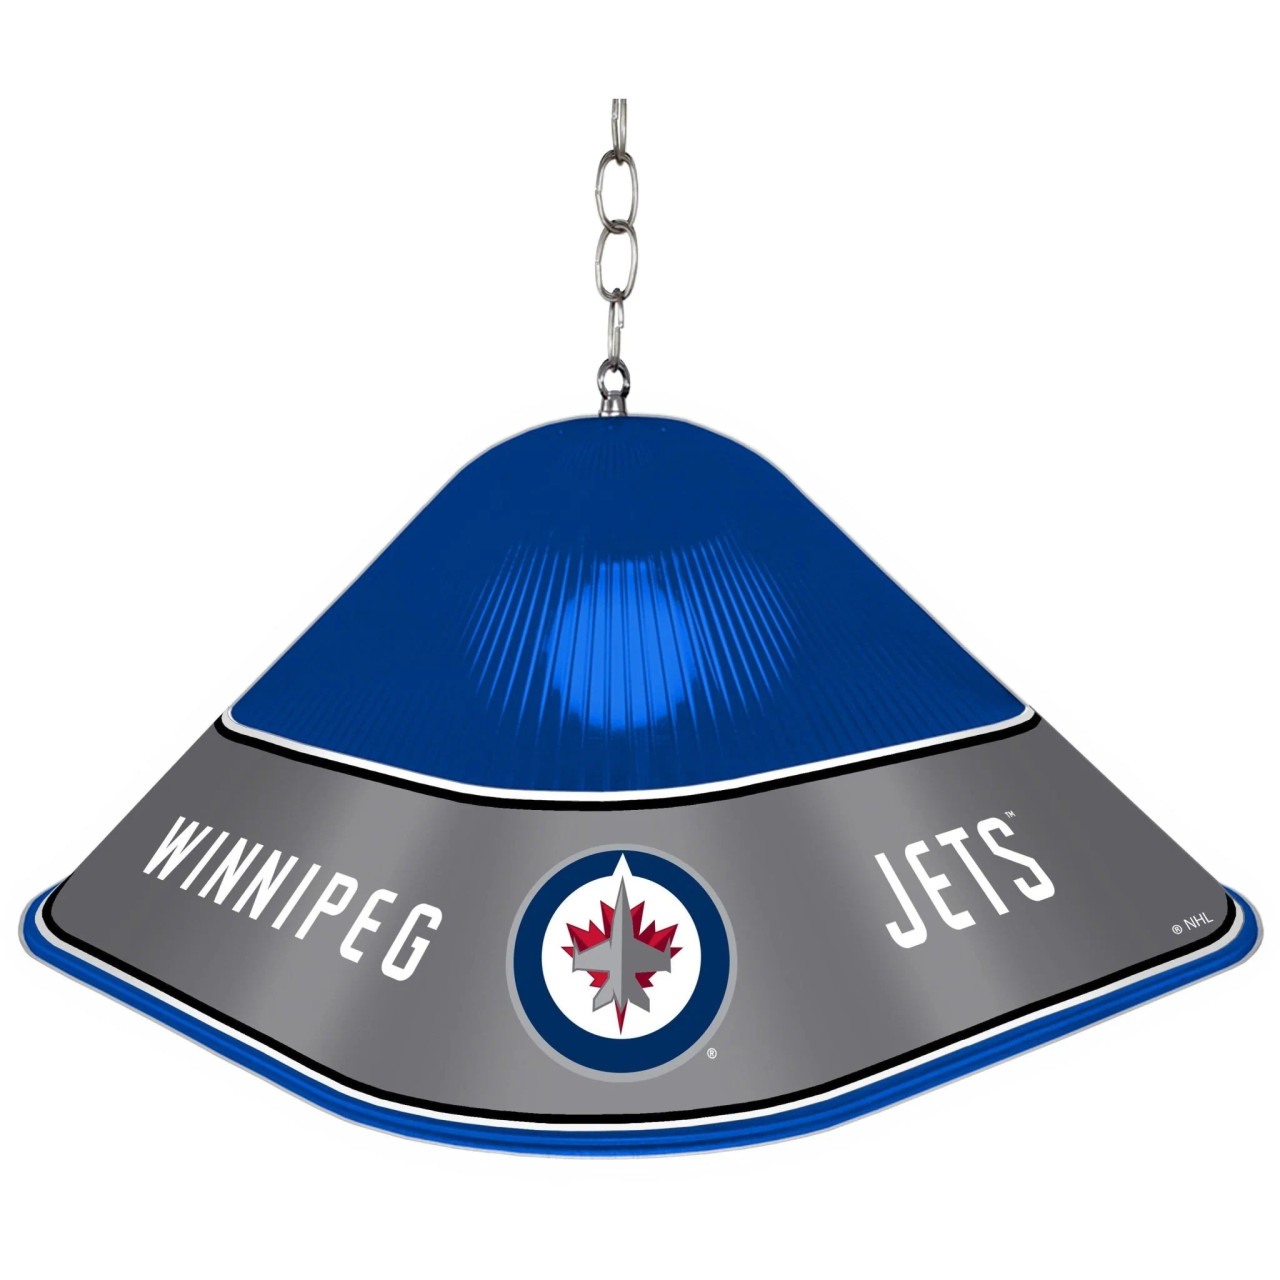 Winnipeg, WIN, Jets, Game, Table, Light, Lamp, NHWINN-410-01, The Fan-Brand, NHL, 686878994421